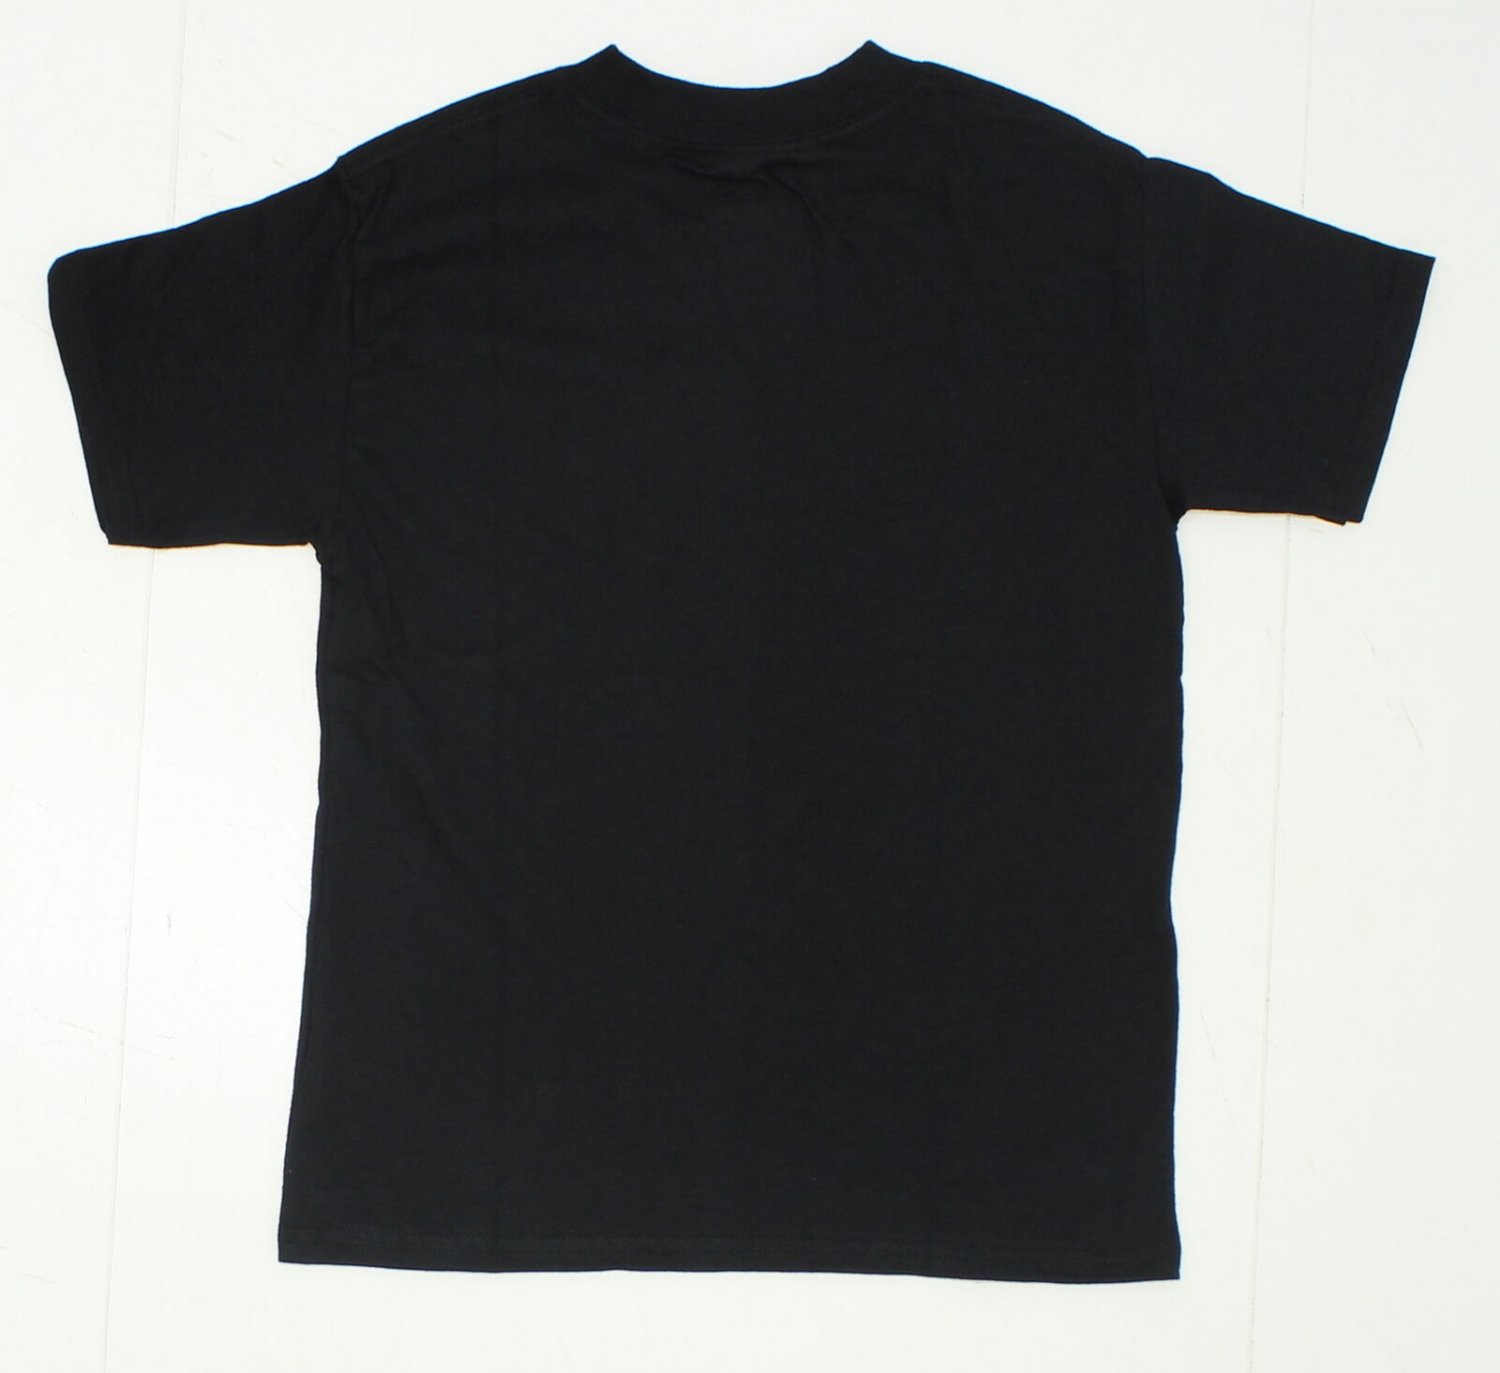 Hanes NEW Beefy Tee Youth Short Sleeve Tee T-Shirt Black Small 02968